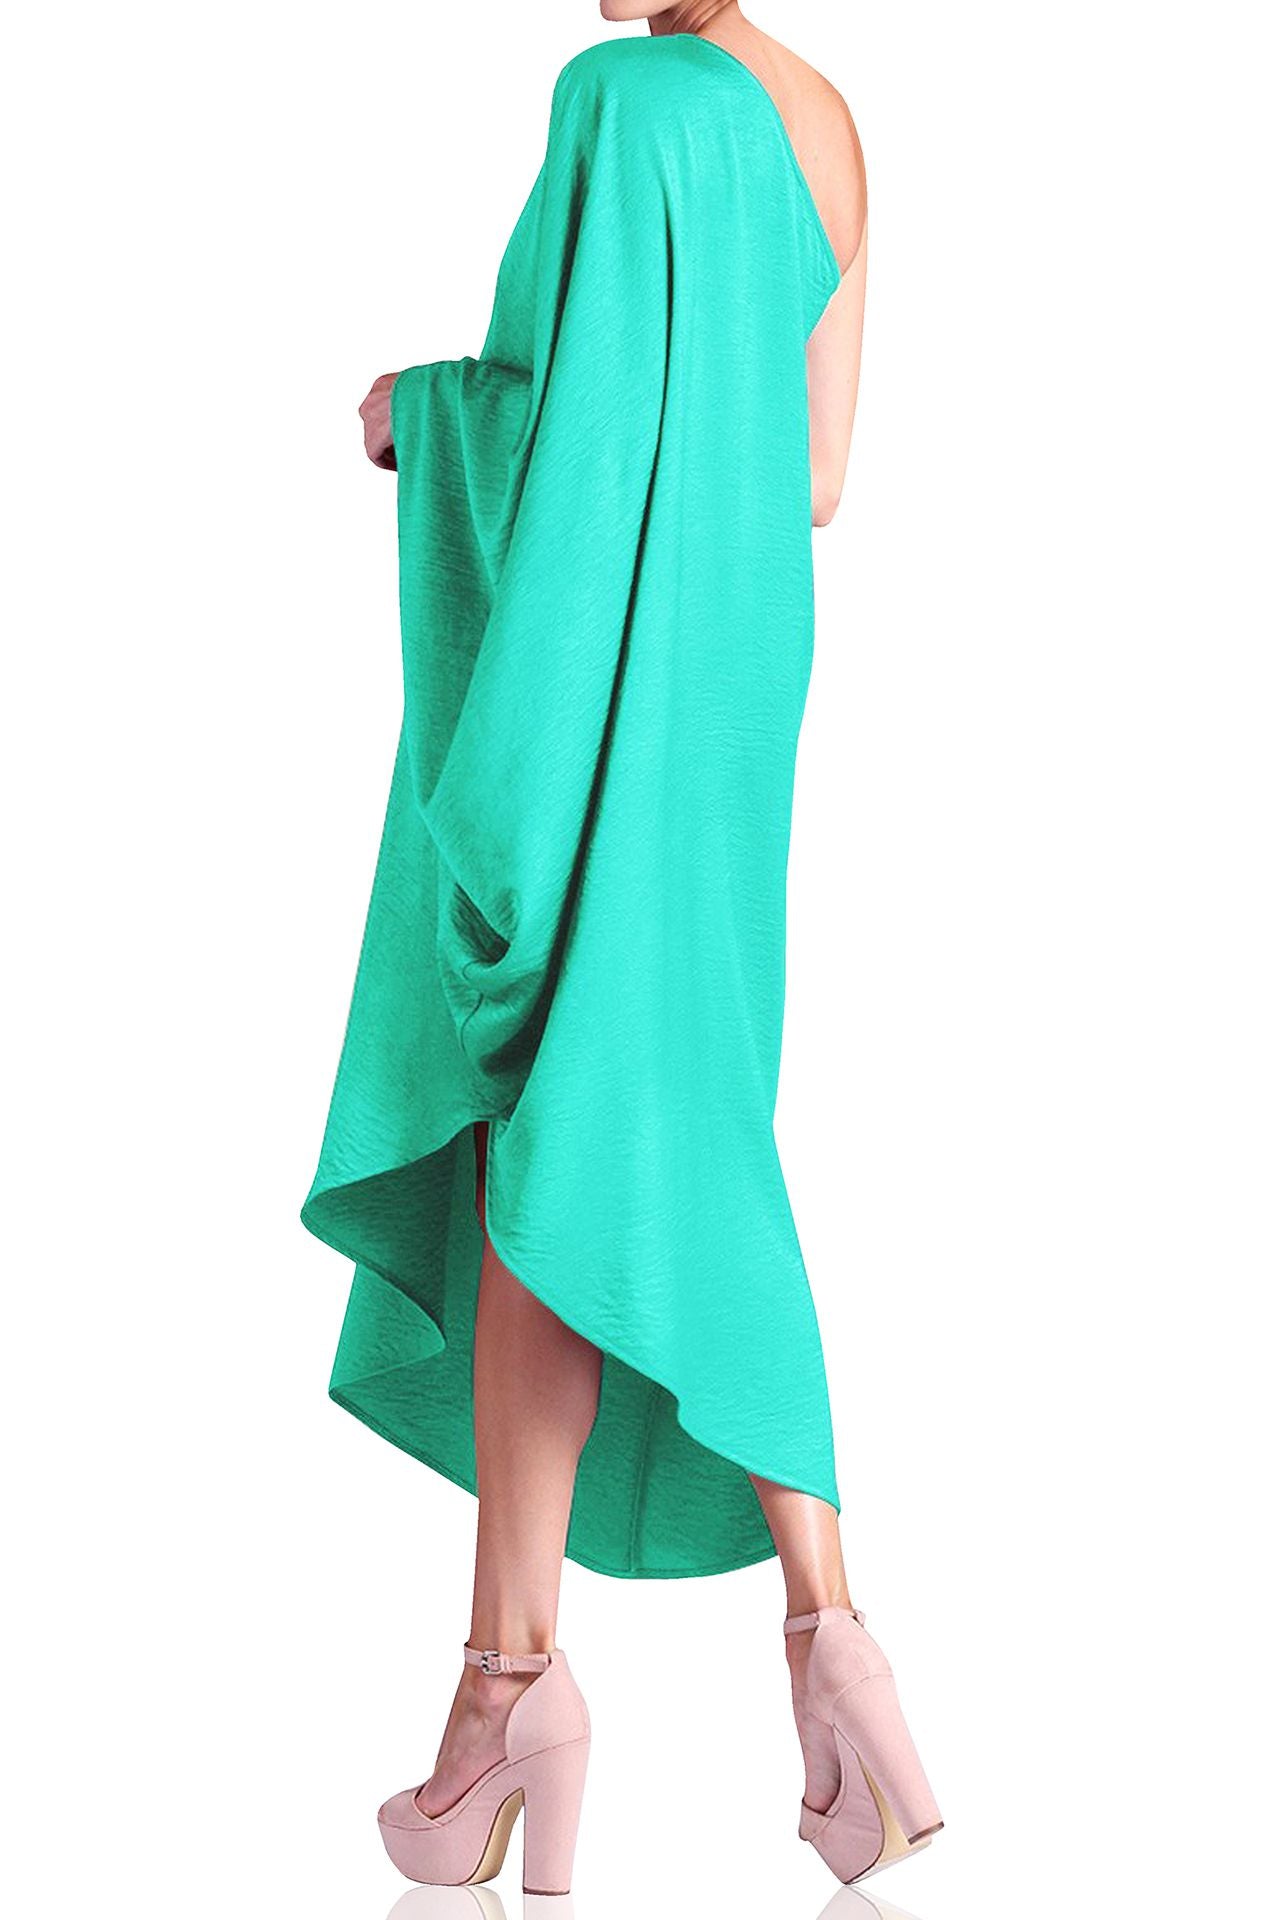 Green One Shoulder Dress for Women